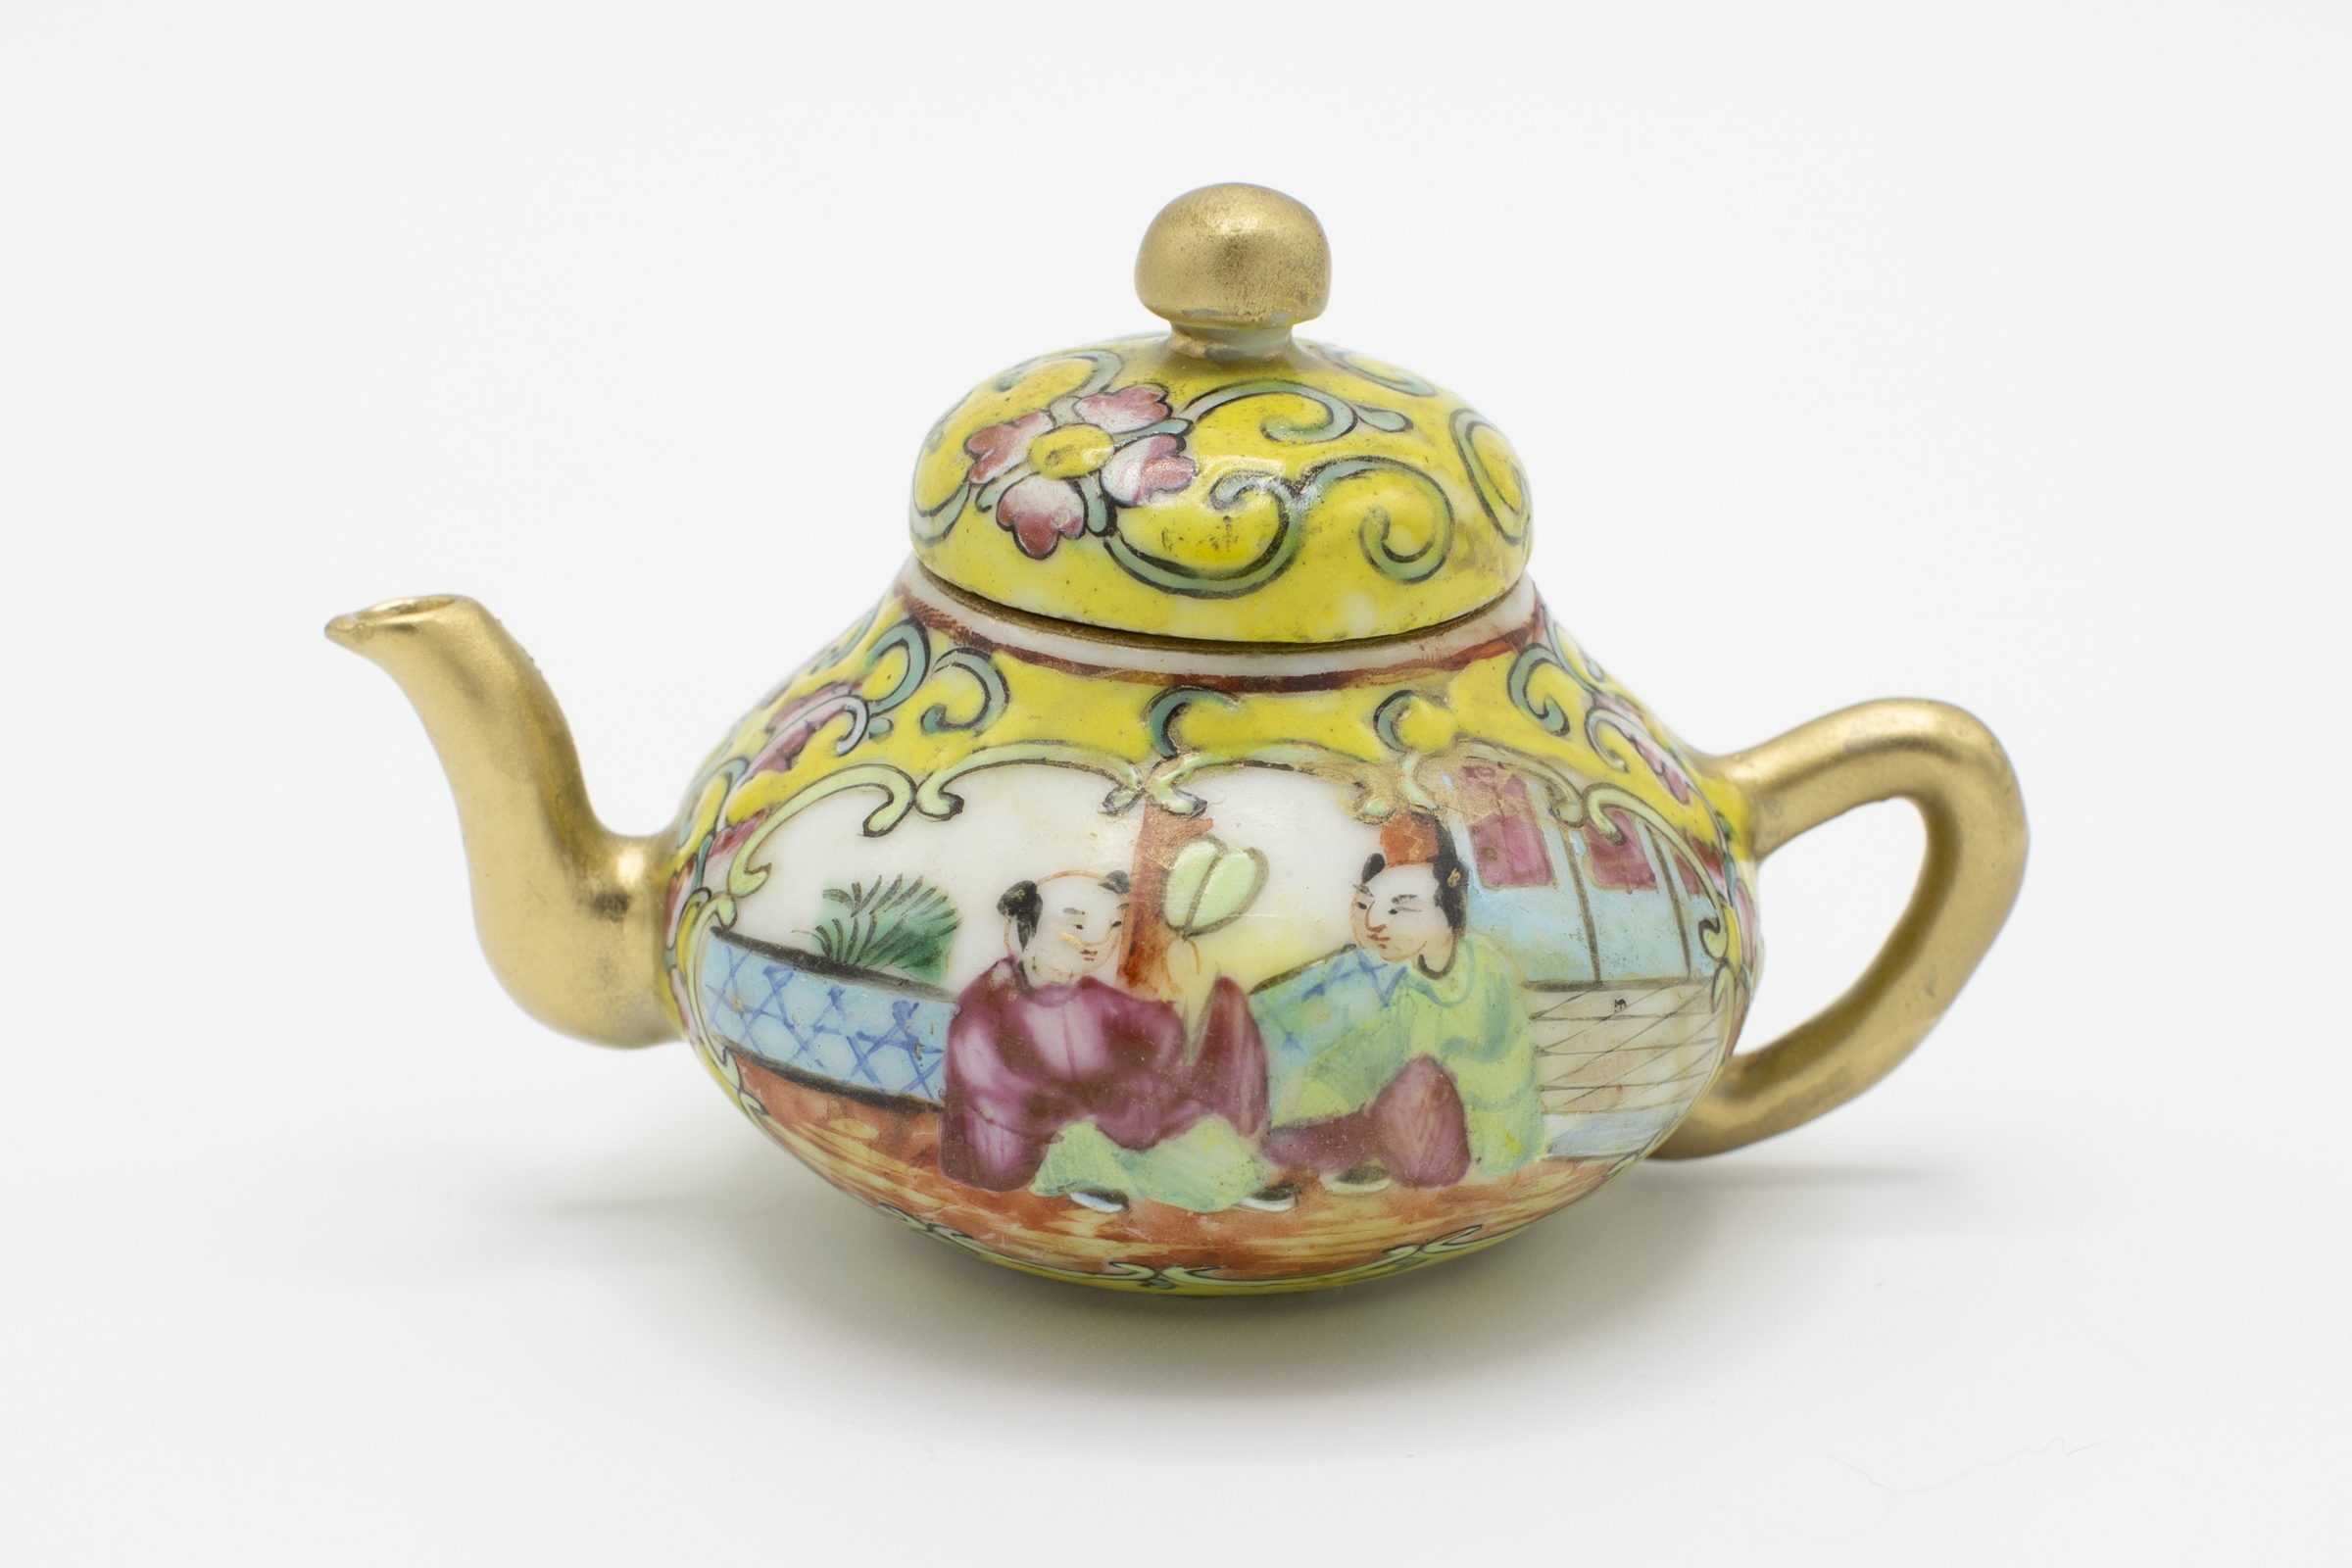 https://wylerantiques.com/wp-content/uploads/2023/03/wyler-antiques-miniature-Chinese-teapot-detail1.jpg